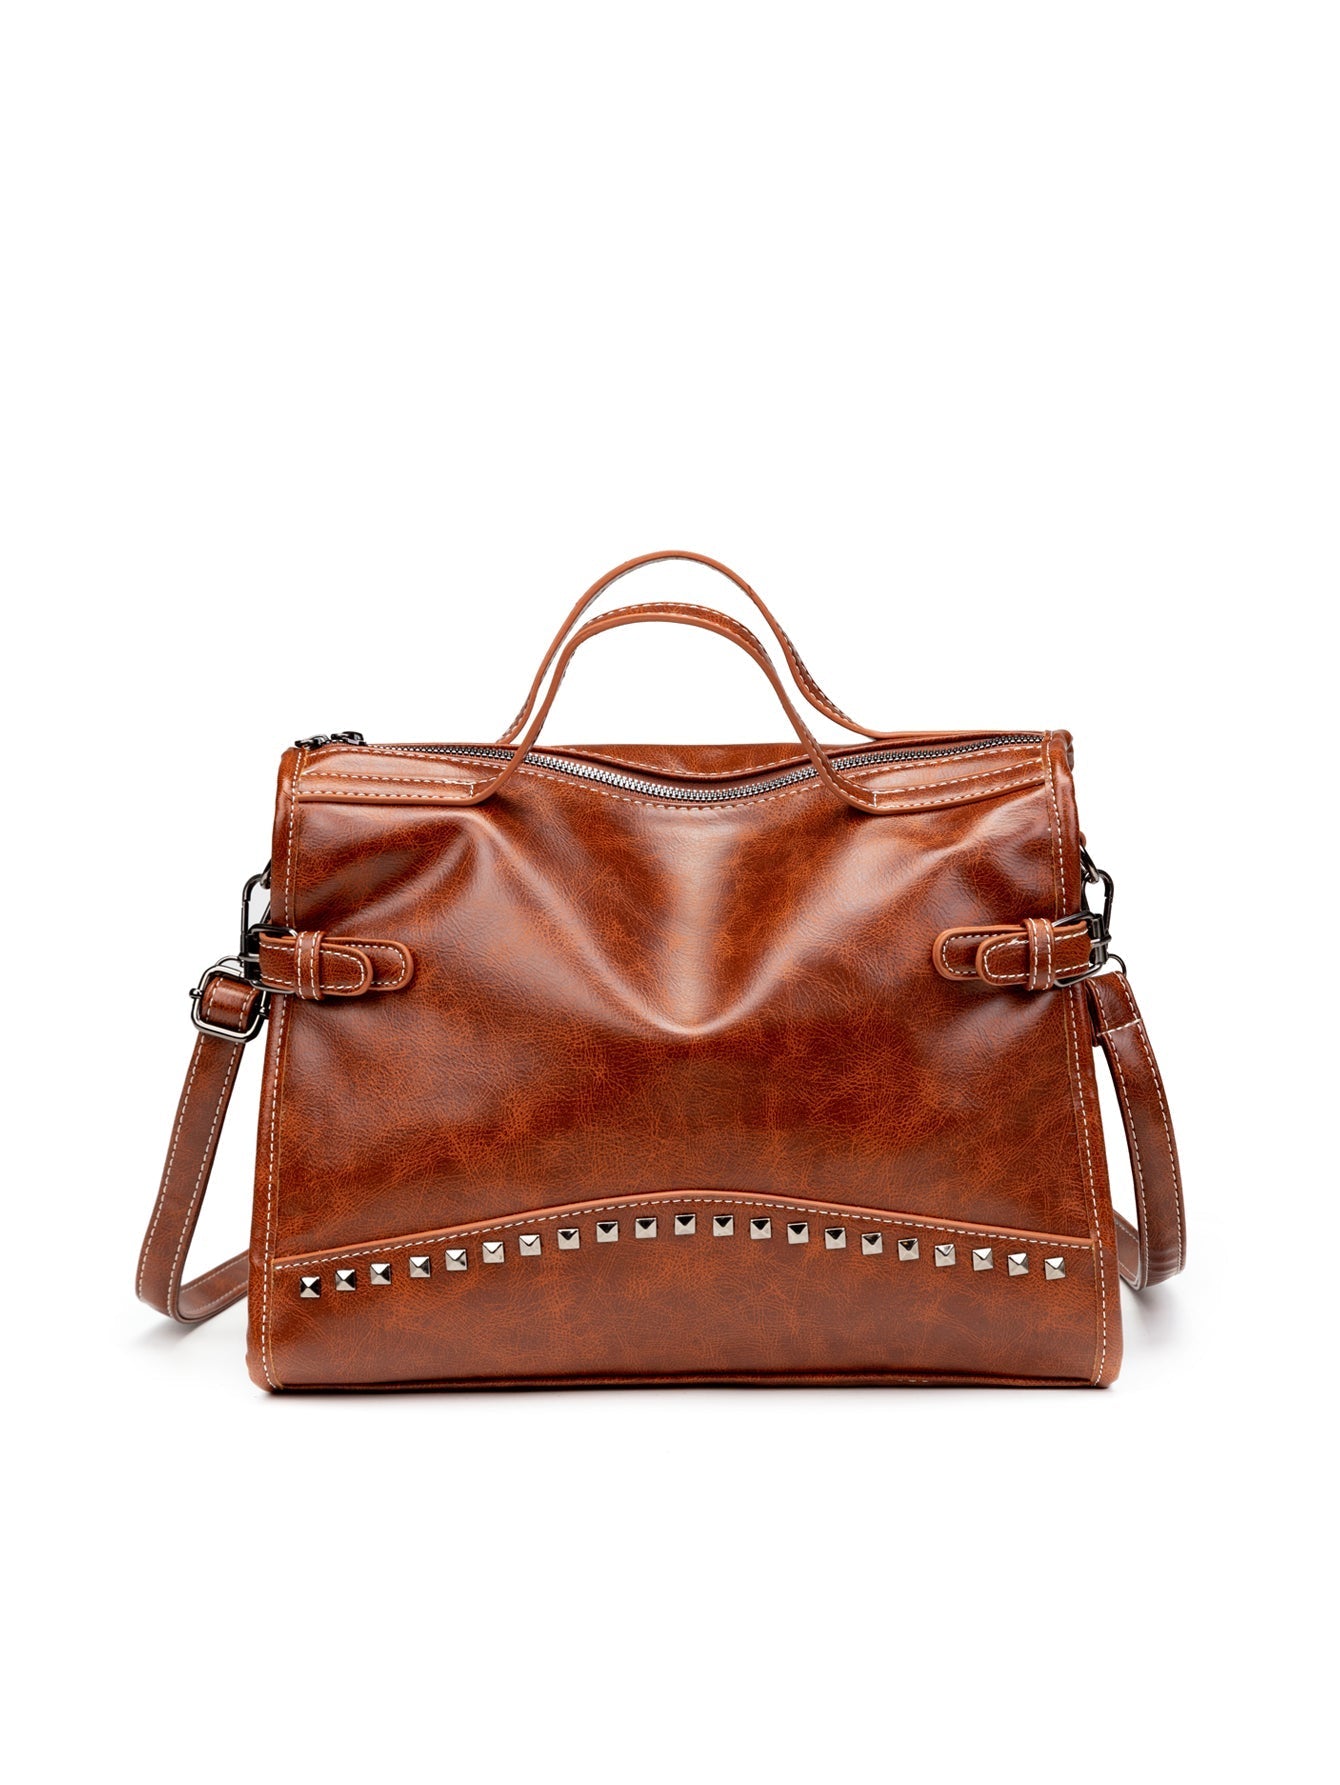 Women Tote Shoulder Bag Large Top Handle Satchel Bag Soft Faux Leather Hobo Bag Roomy Purse and Handbag Sai Feel